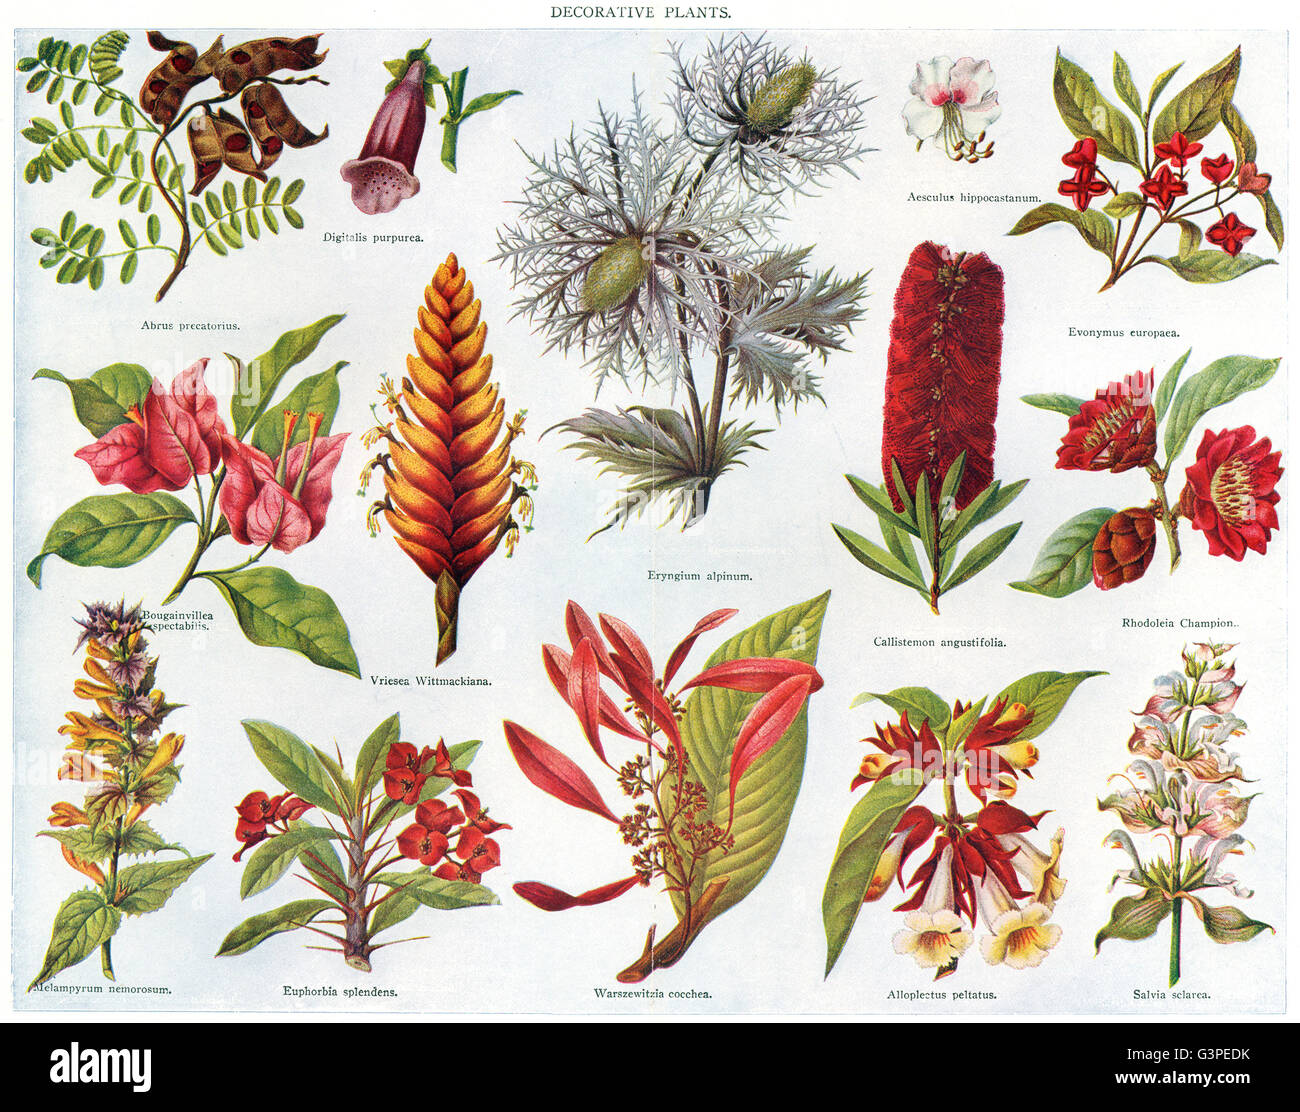 PLANTS: Digitalis Abrus Bougainvillea Vriesea Eryngium Evonymus Rhodoleia, 1907 Stock Photo